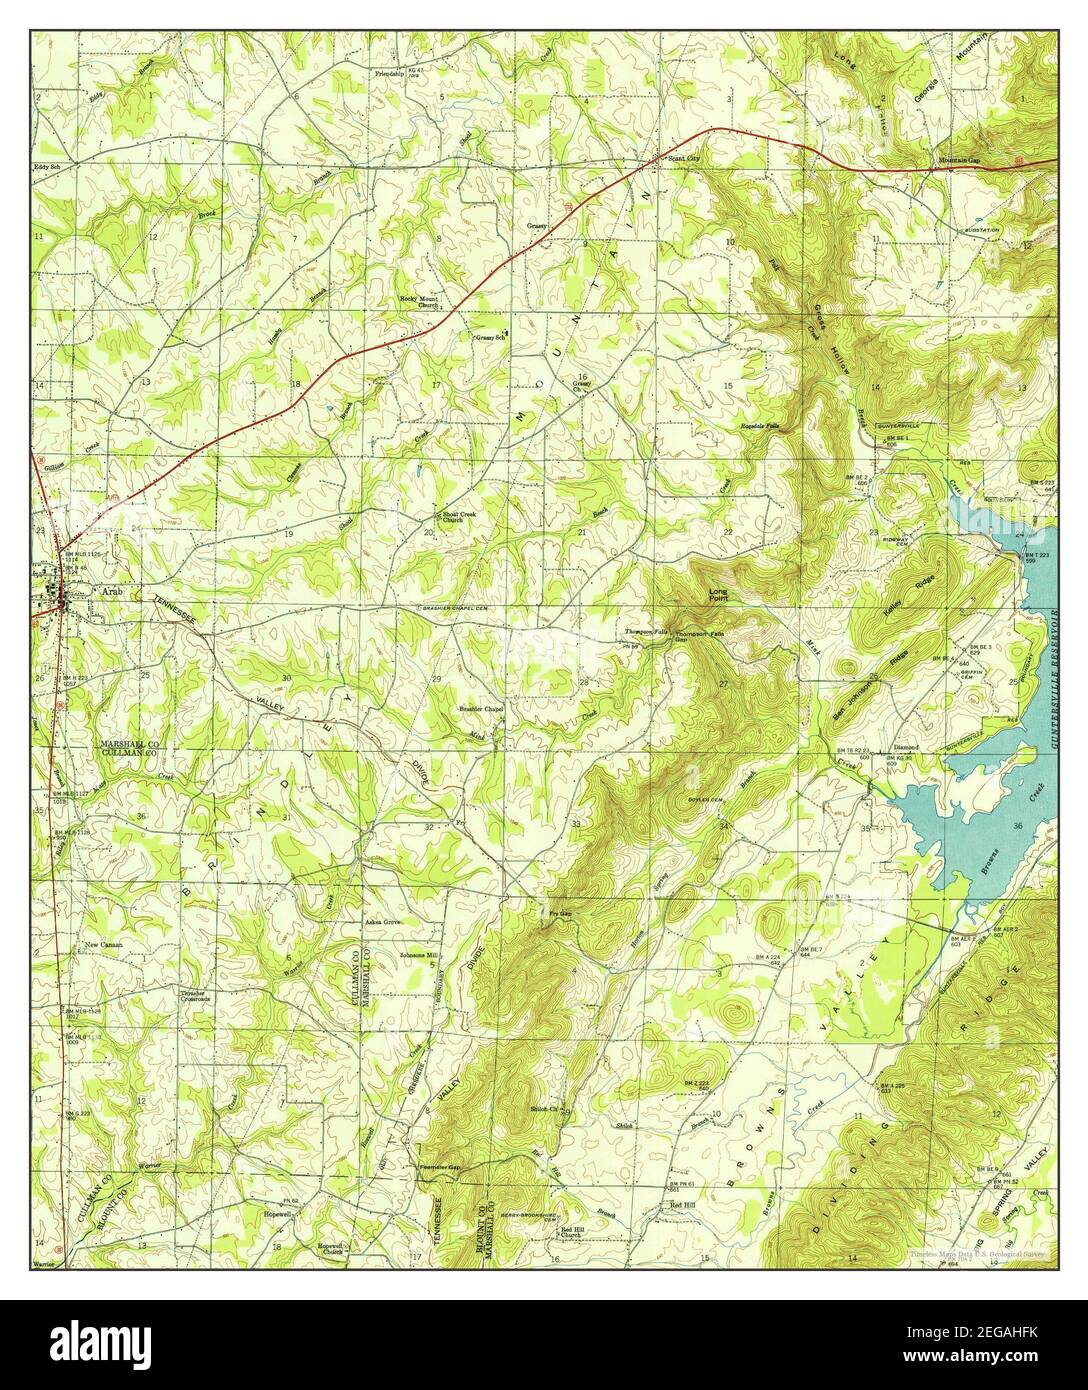 Arab, Alabama, map 1950, 1:24000, United States of America by Timeless Maps, data U.S. Geological Survey Stock Photo